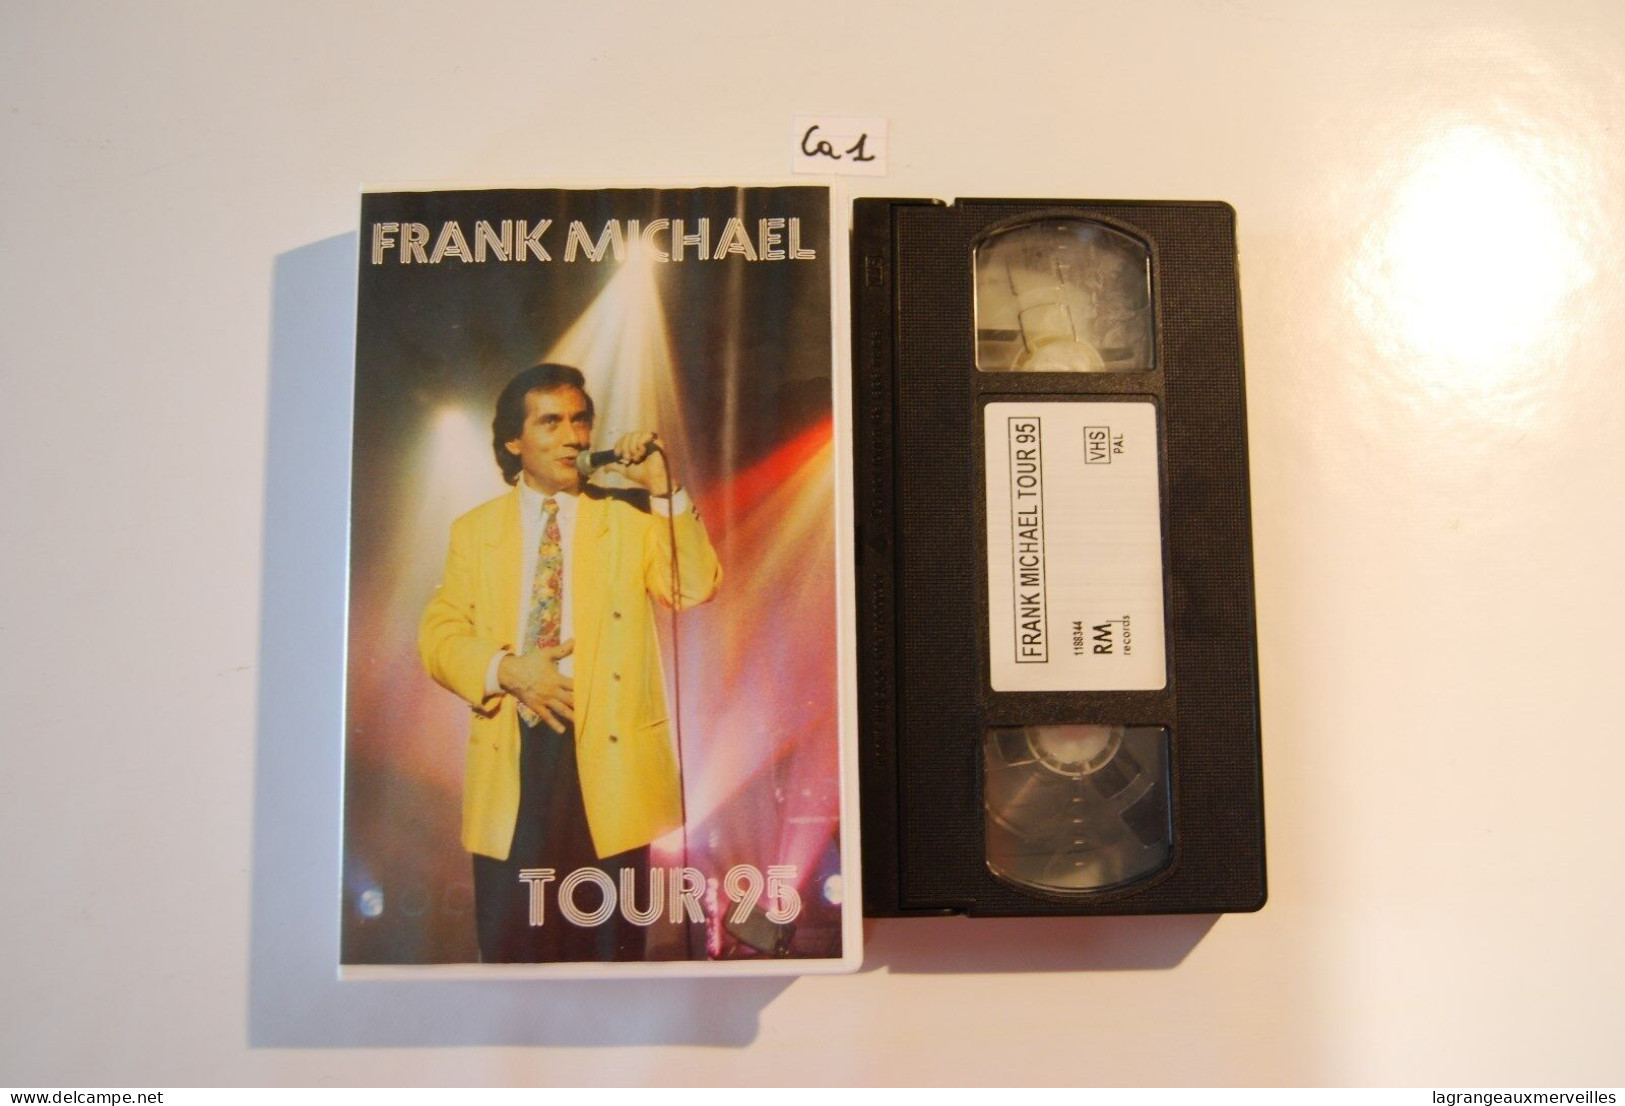 CA1 K7 VHS Frank Mikael Tour 95 - Concert & Music